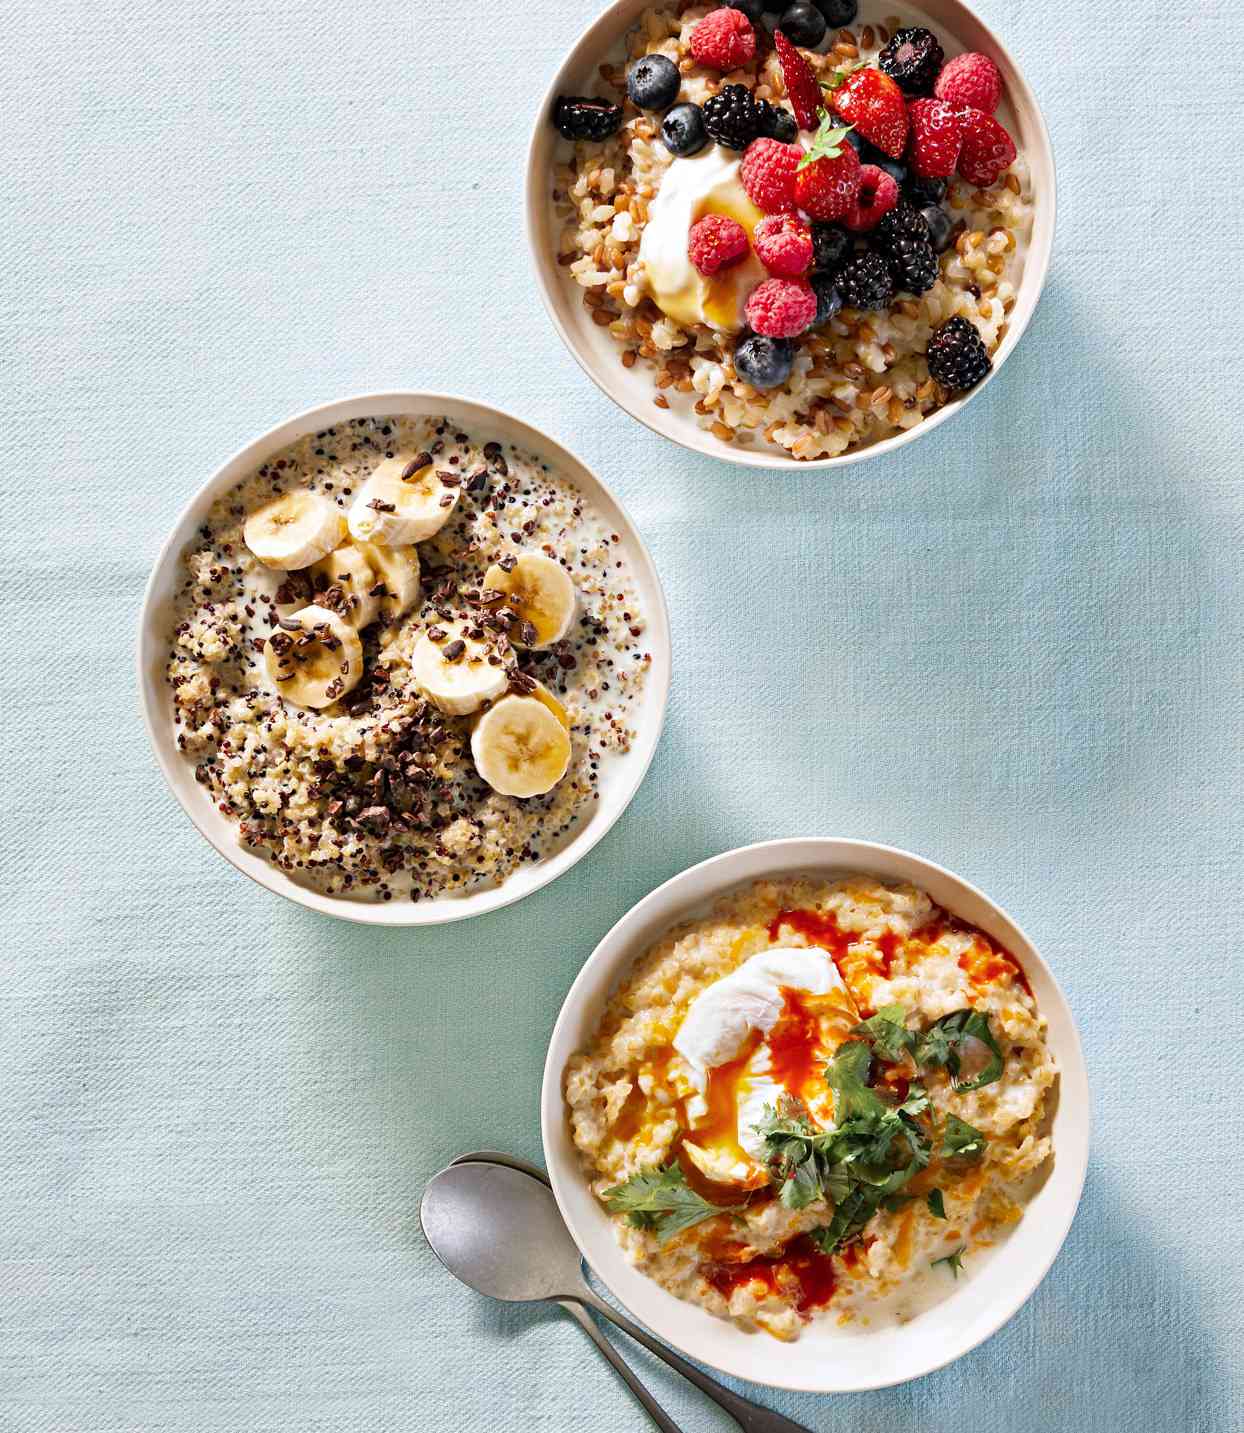 How to Make Quick Grain Bowls for Breakfast | Martha Stewart